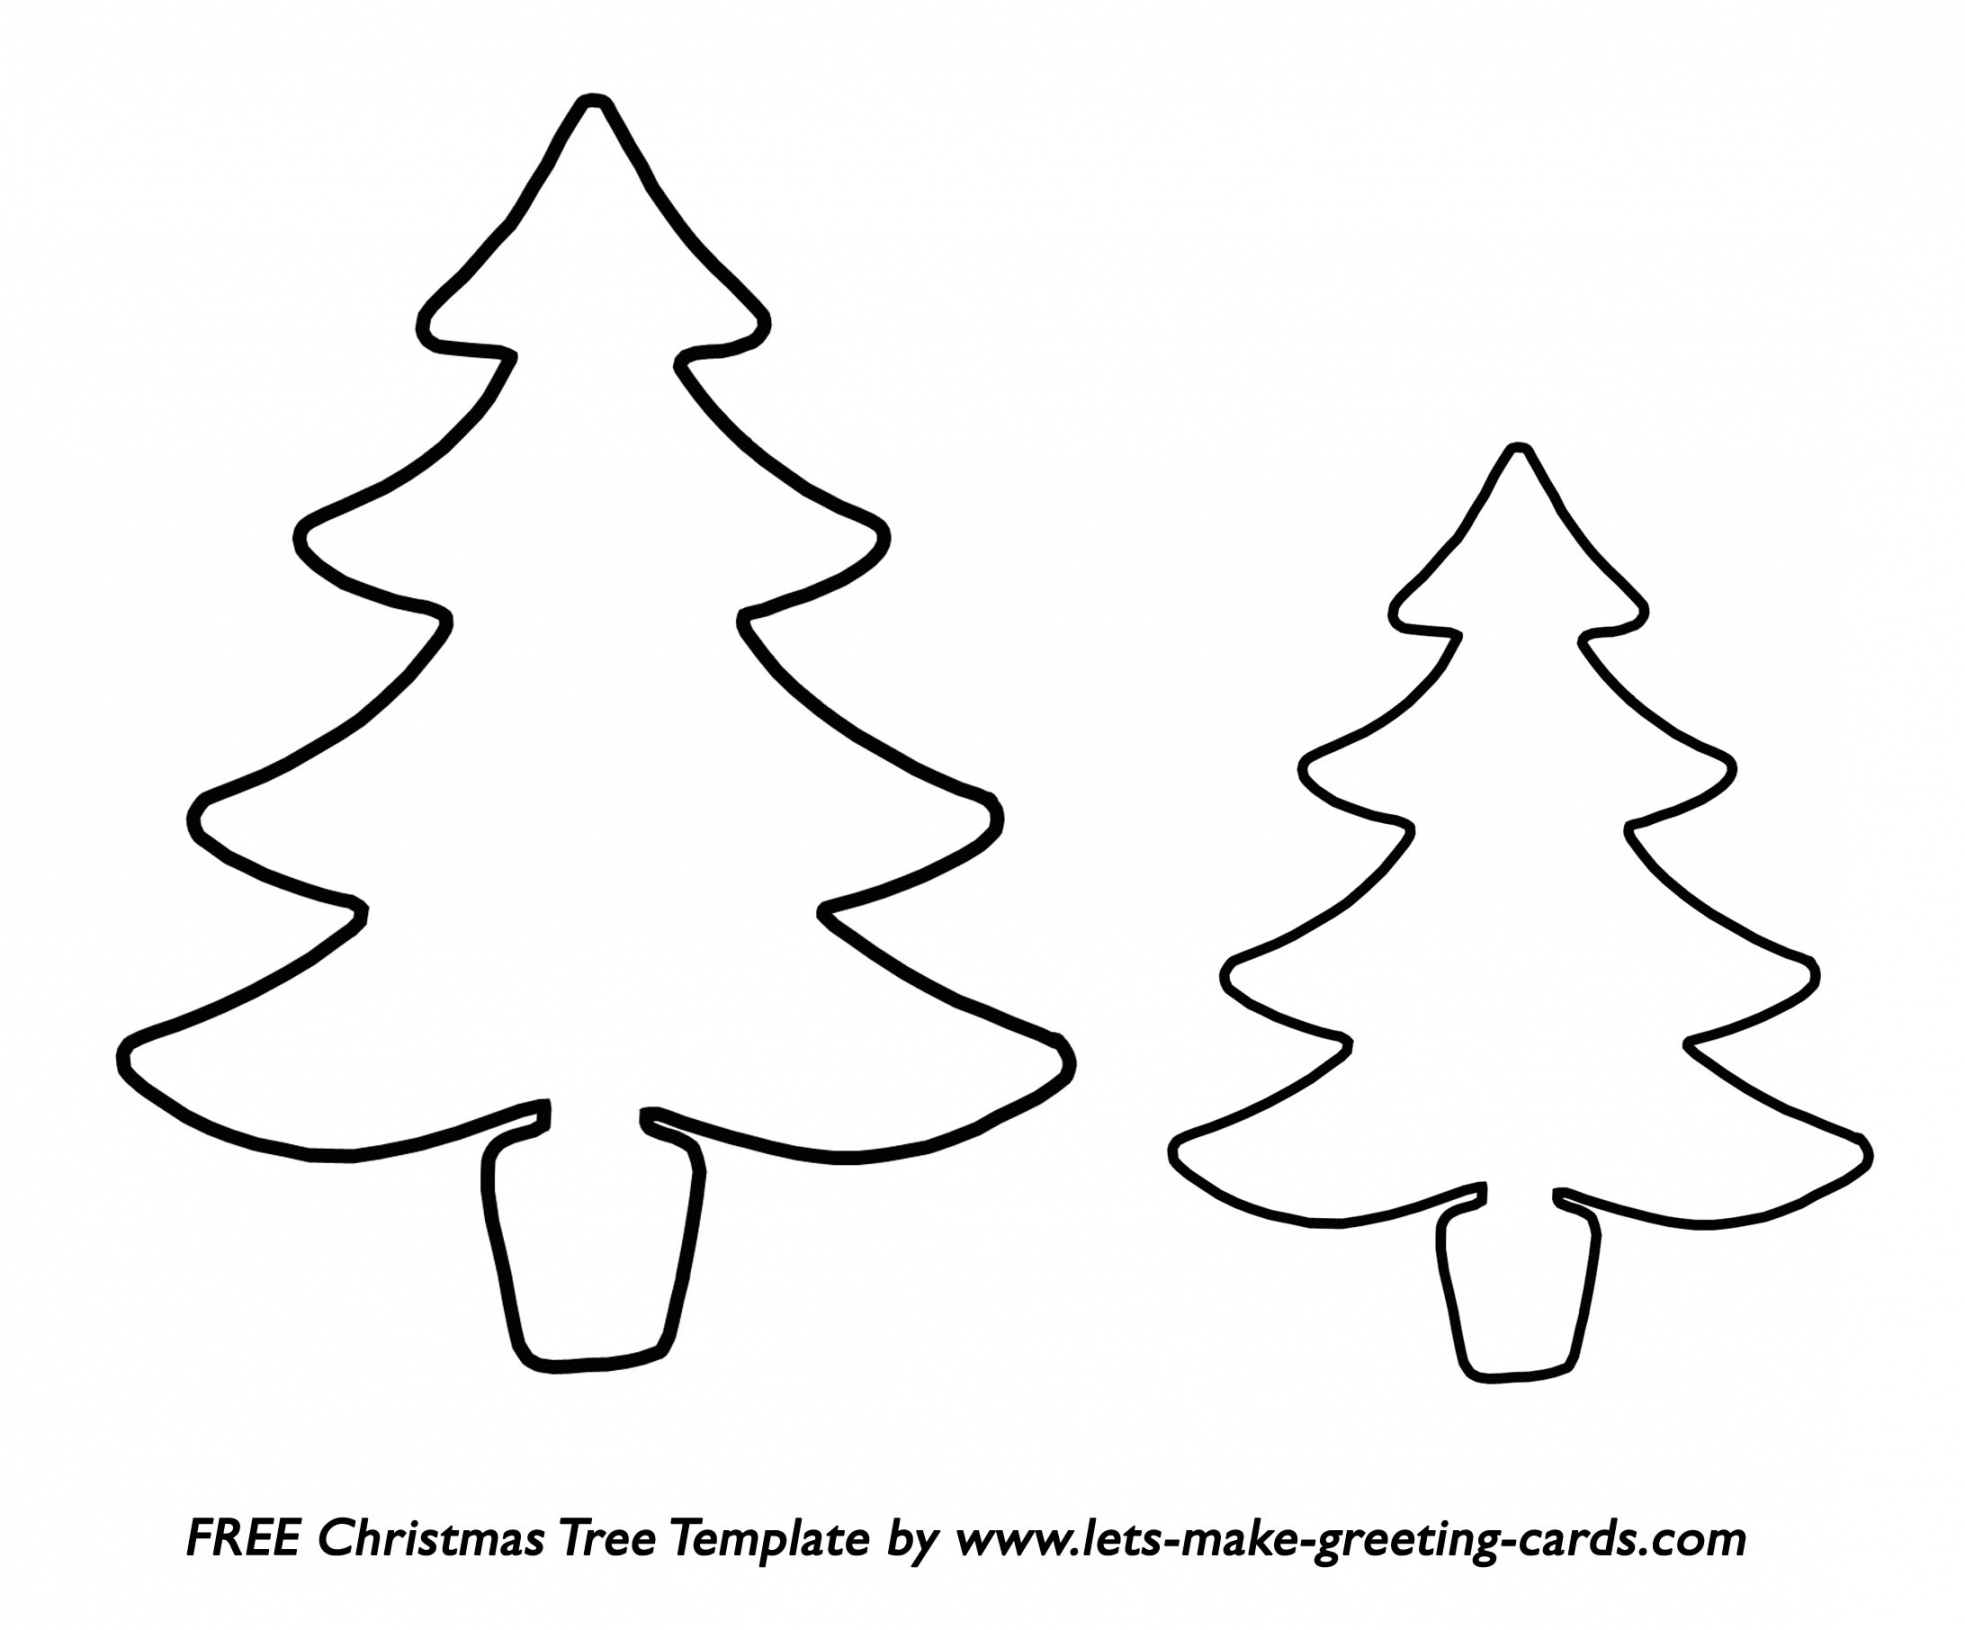 Free Christmas Tree Templates - FREE Printables - Free Christmas Tree Template